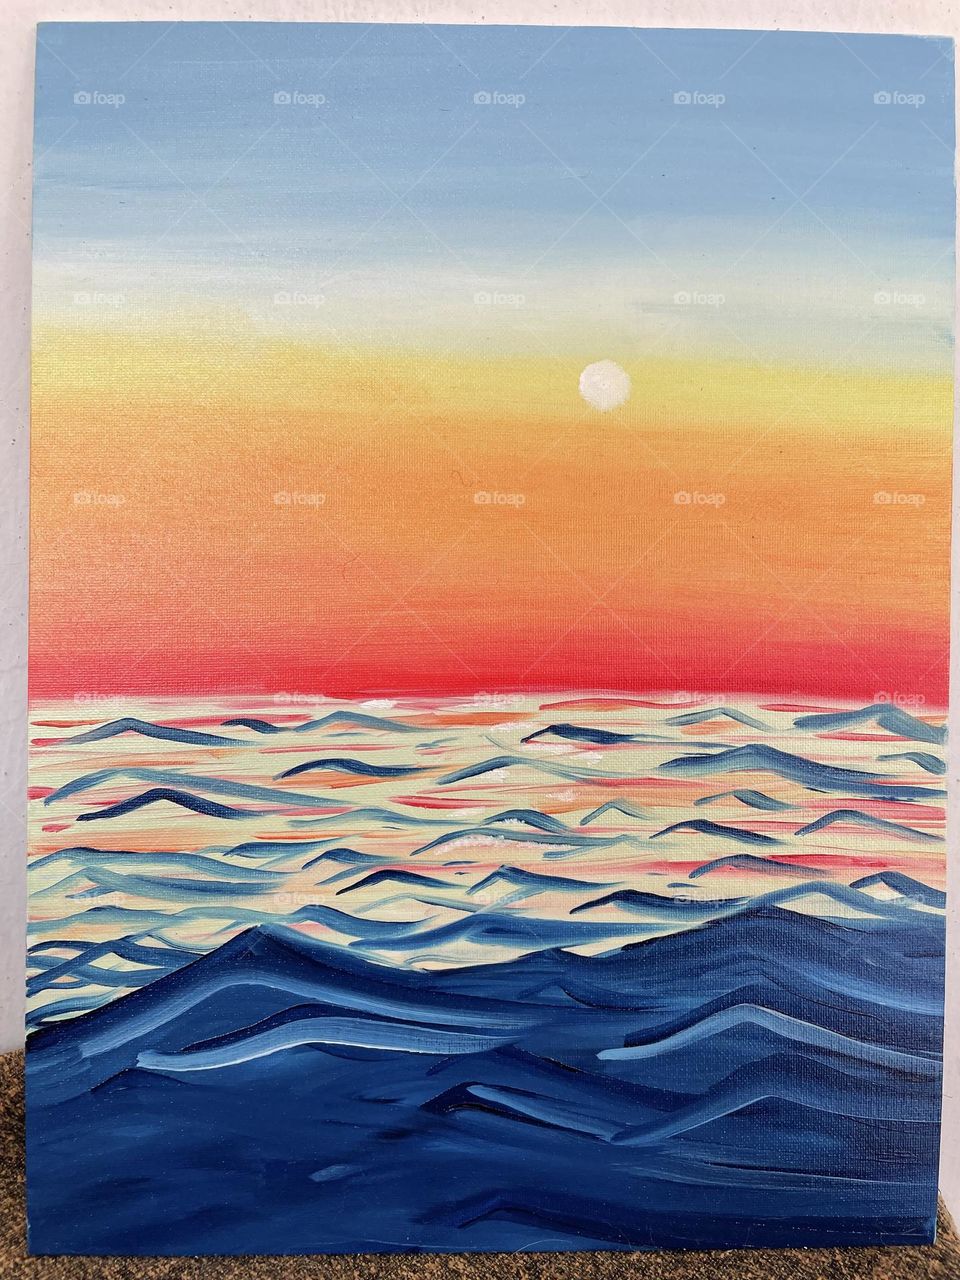 Painting seaside at sunset 